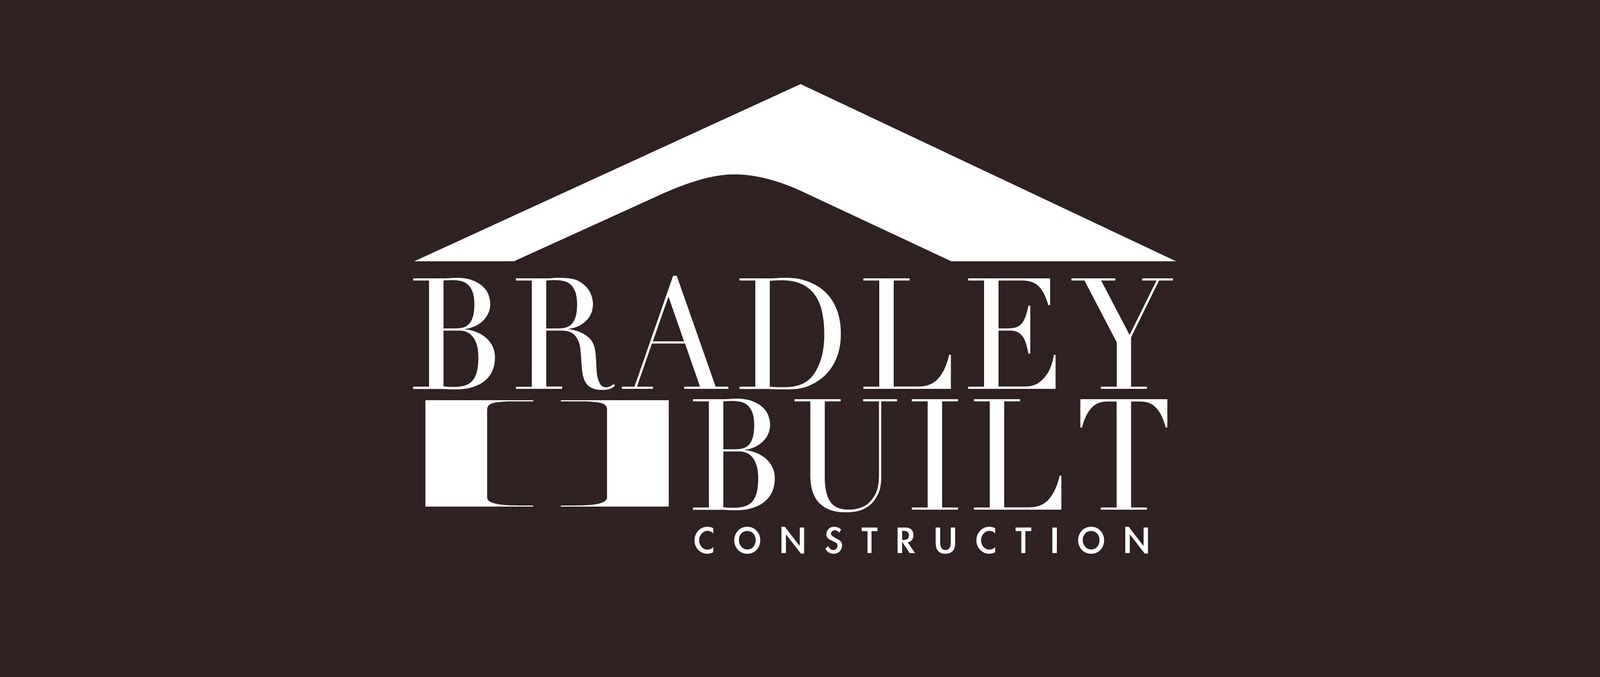 BRADLEY BUILT CONSTRUCTION